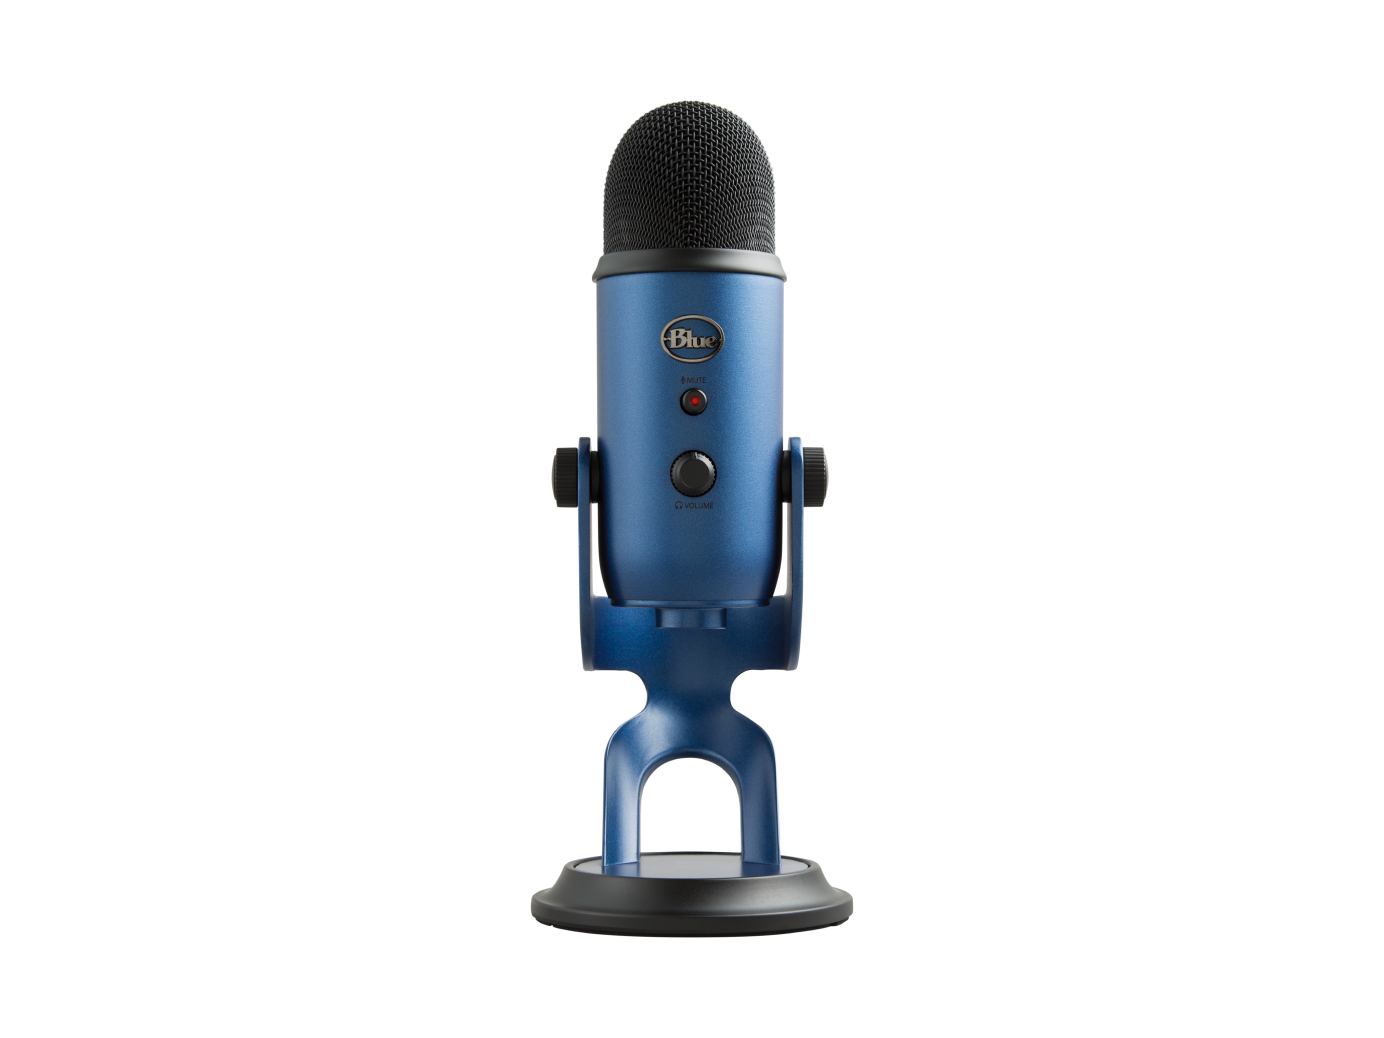 efterklang tonehøjde Egern Yeti - Premium Multi-Pattern USB Microphone with Blue VO!CE | Logitech G